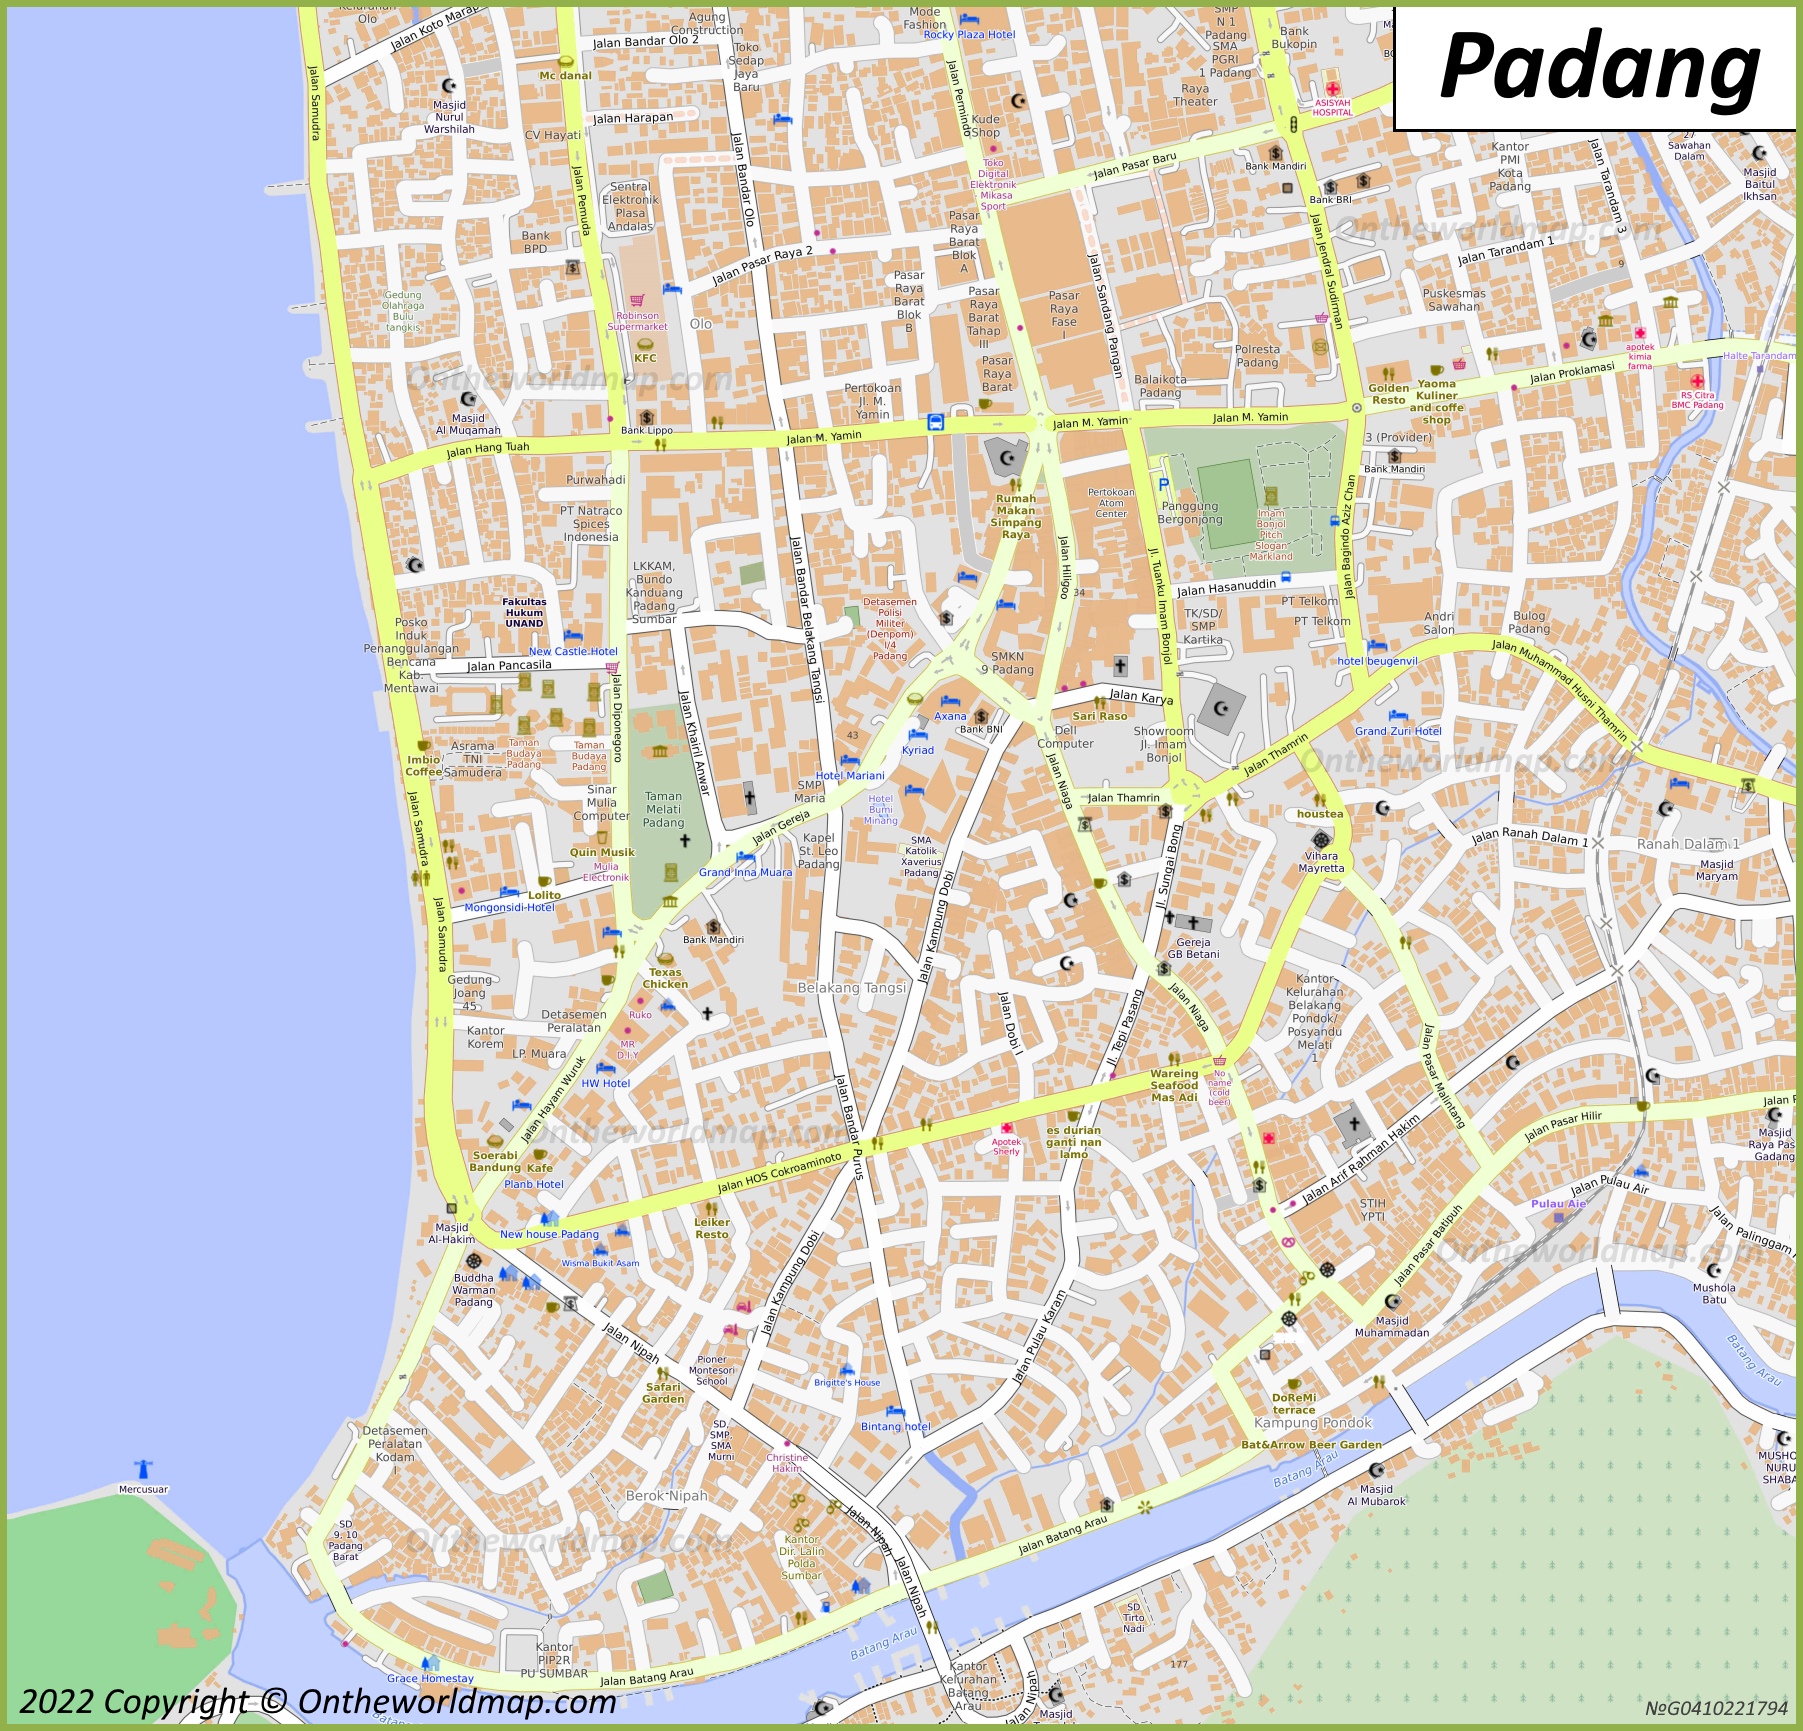 Padang City Centre Map